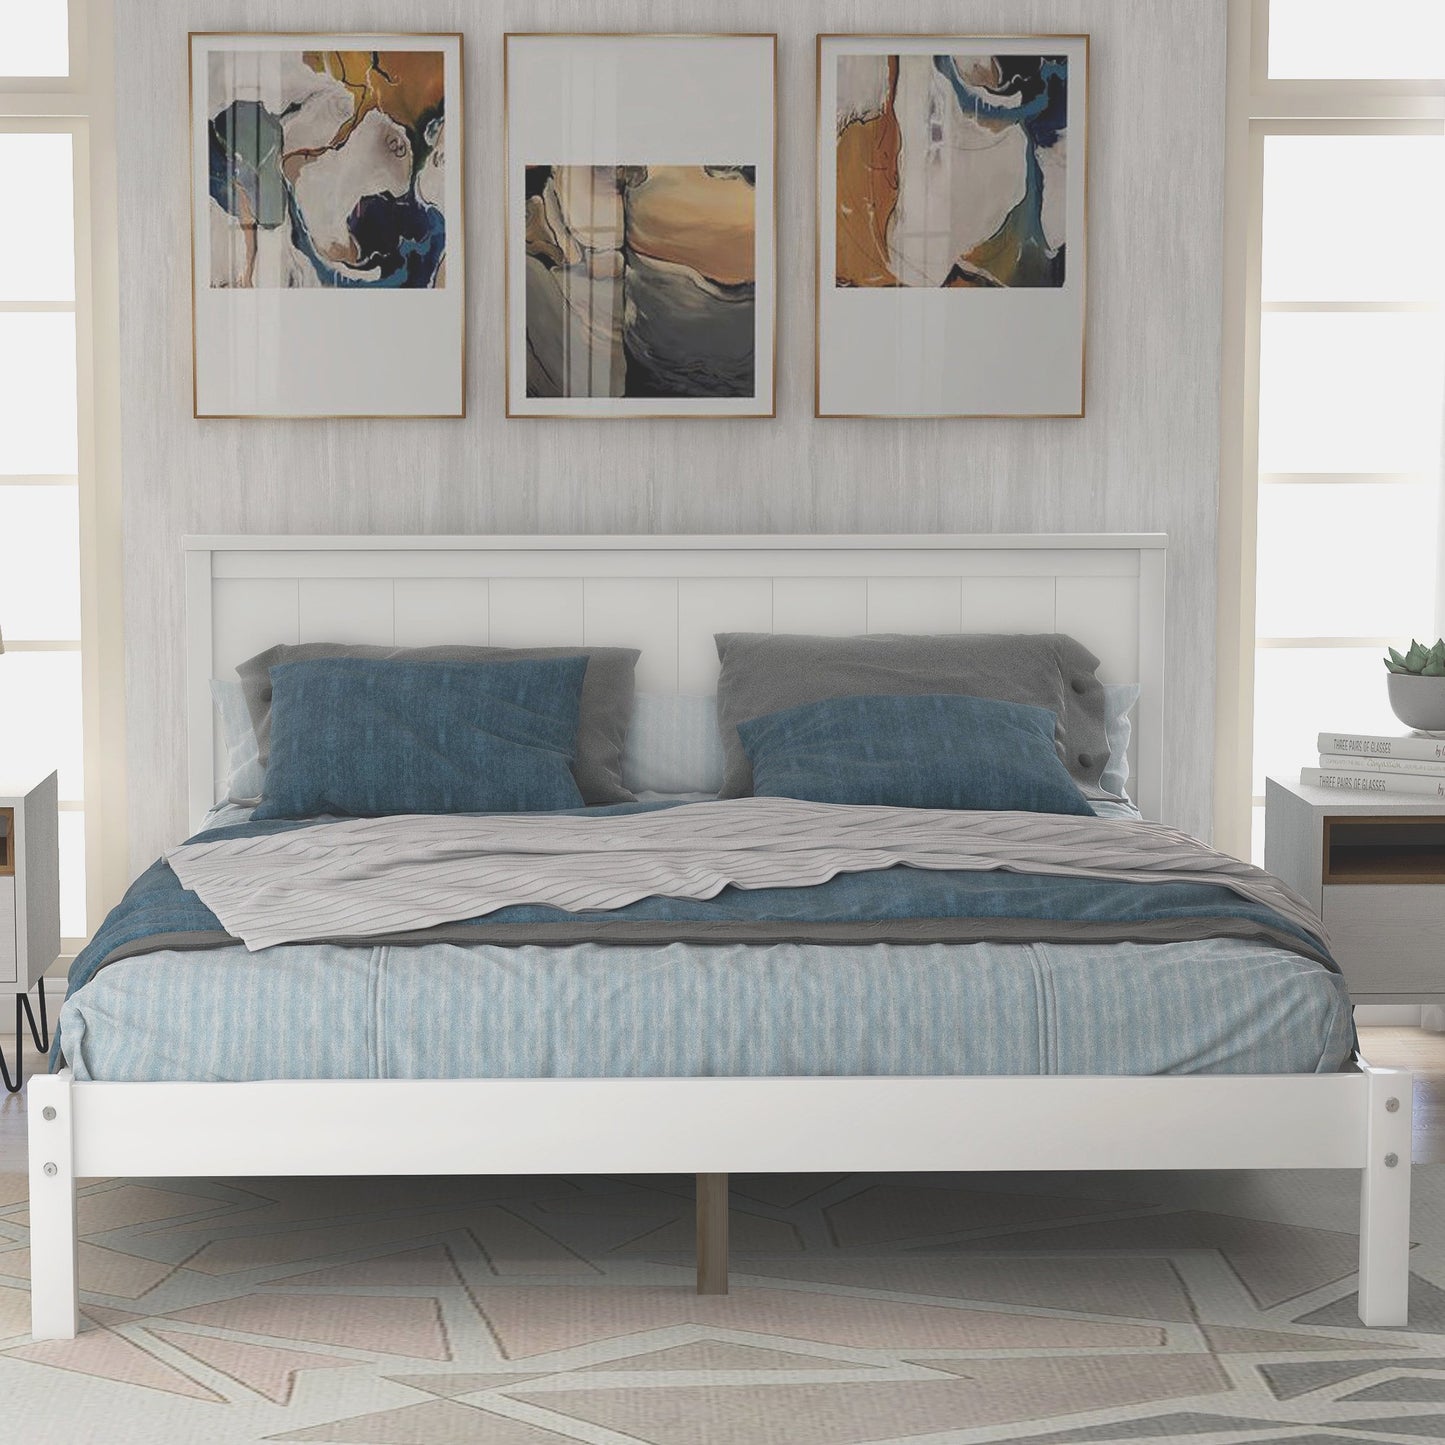 Full Size Bed frame, Wooden Bed Frame with Headboard, Full Bed Frame for Kids Adults, Full Size Bed Frame for Bedroom, White, LJ2453